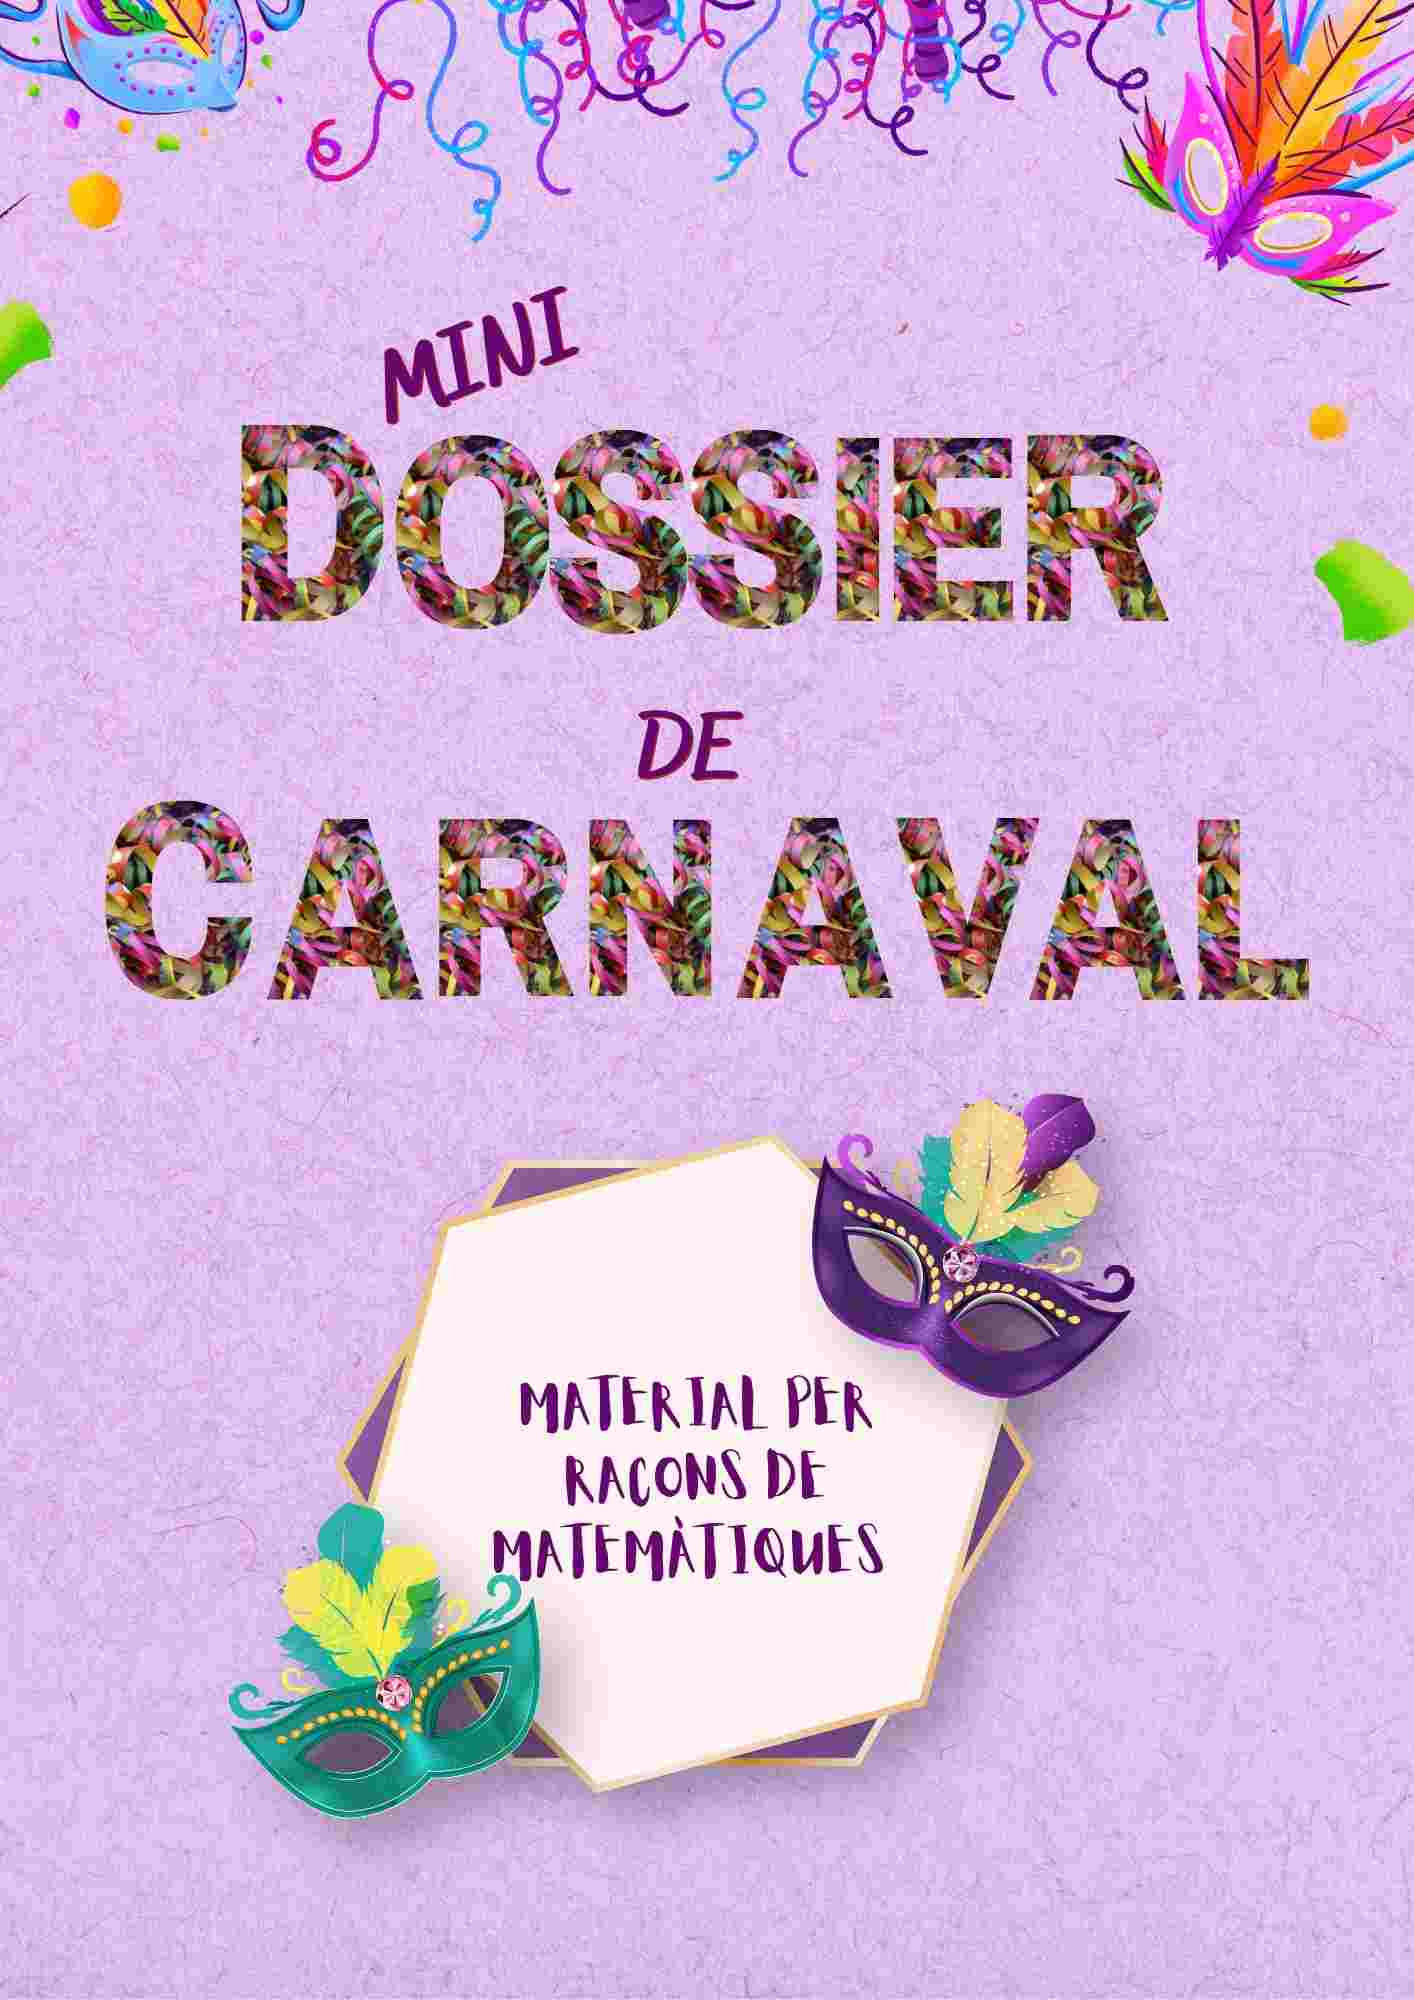 Mini dossier mates carnaval